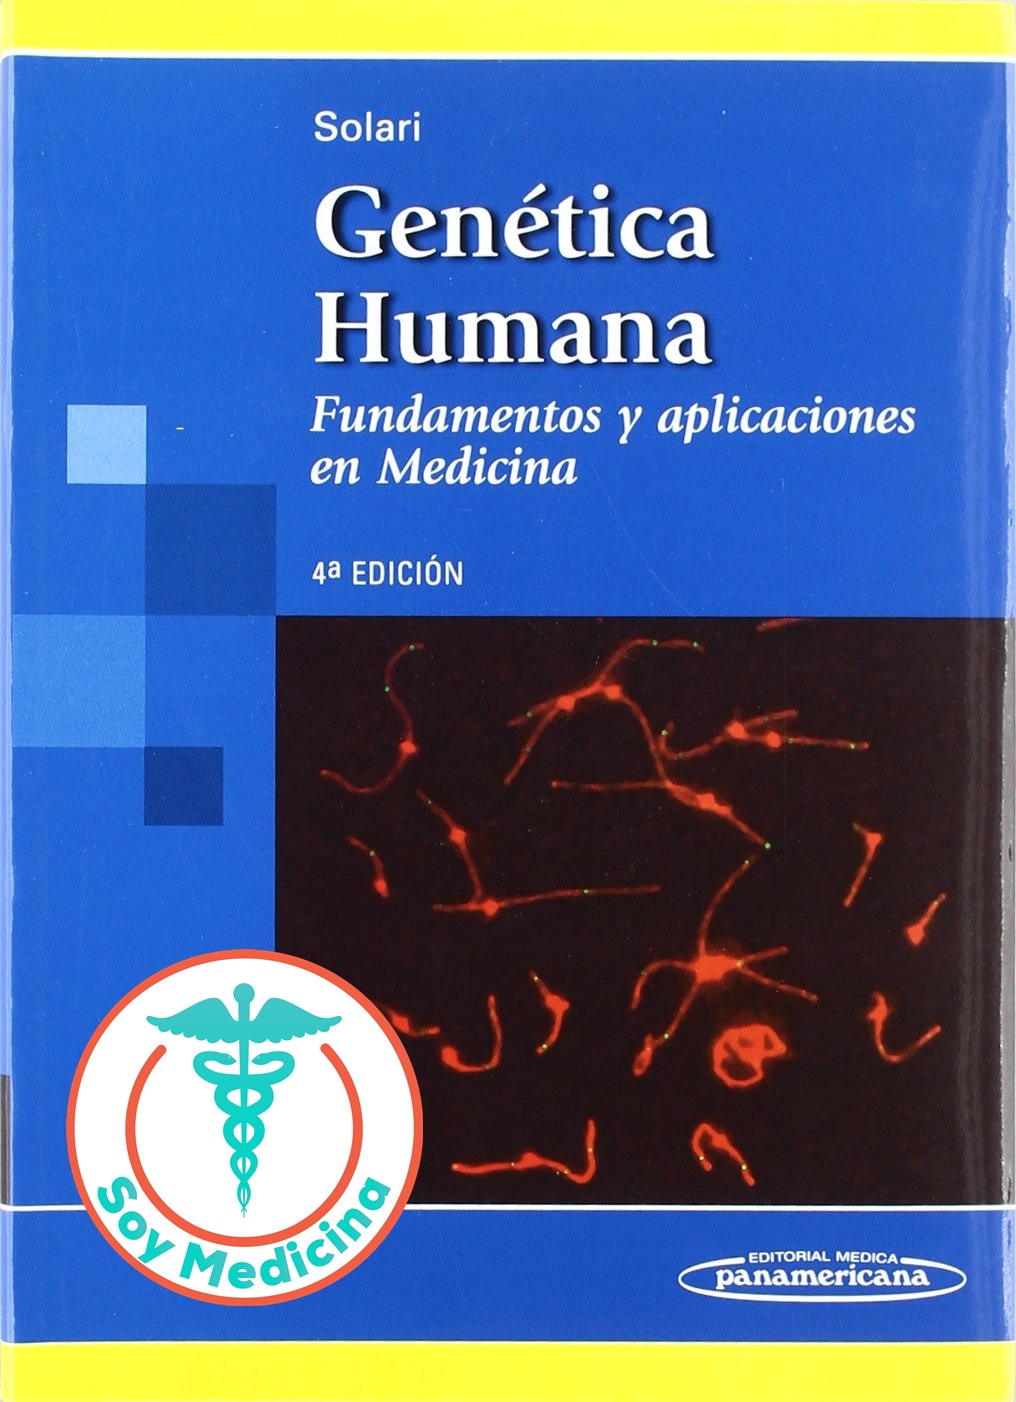 Genética Humana Solari - 4 Edicion